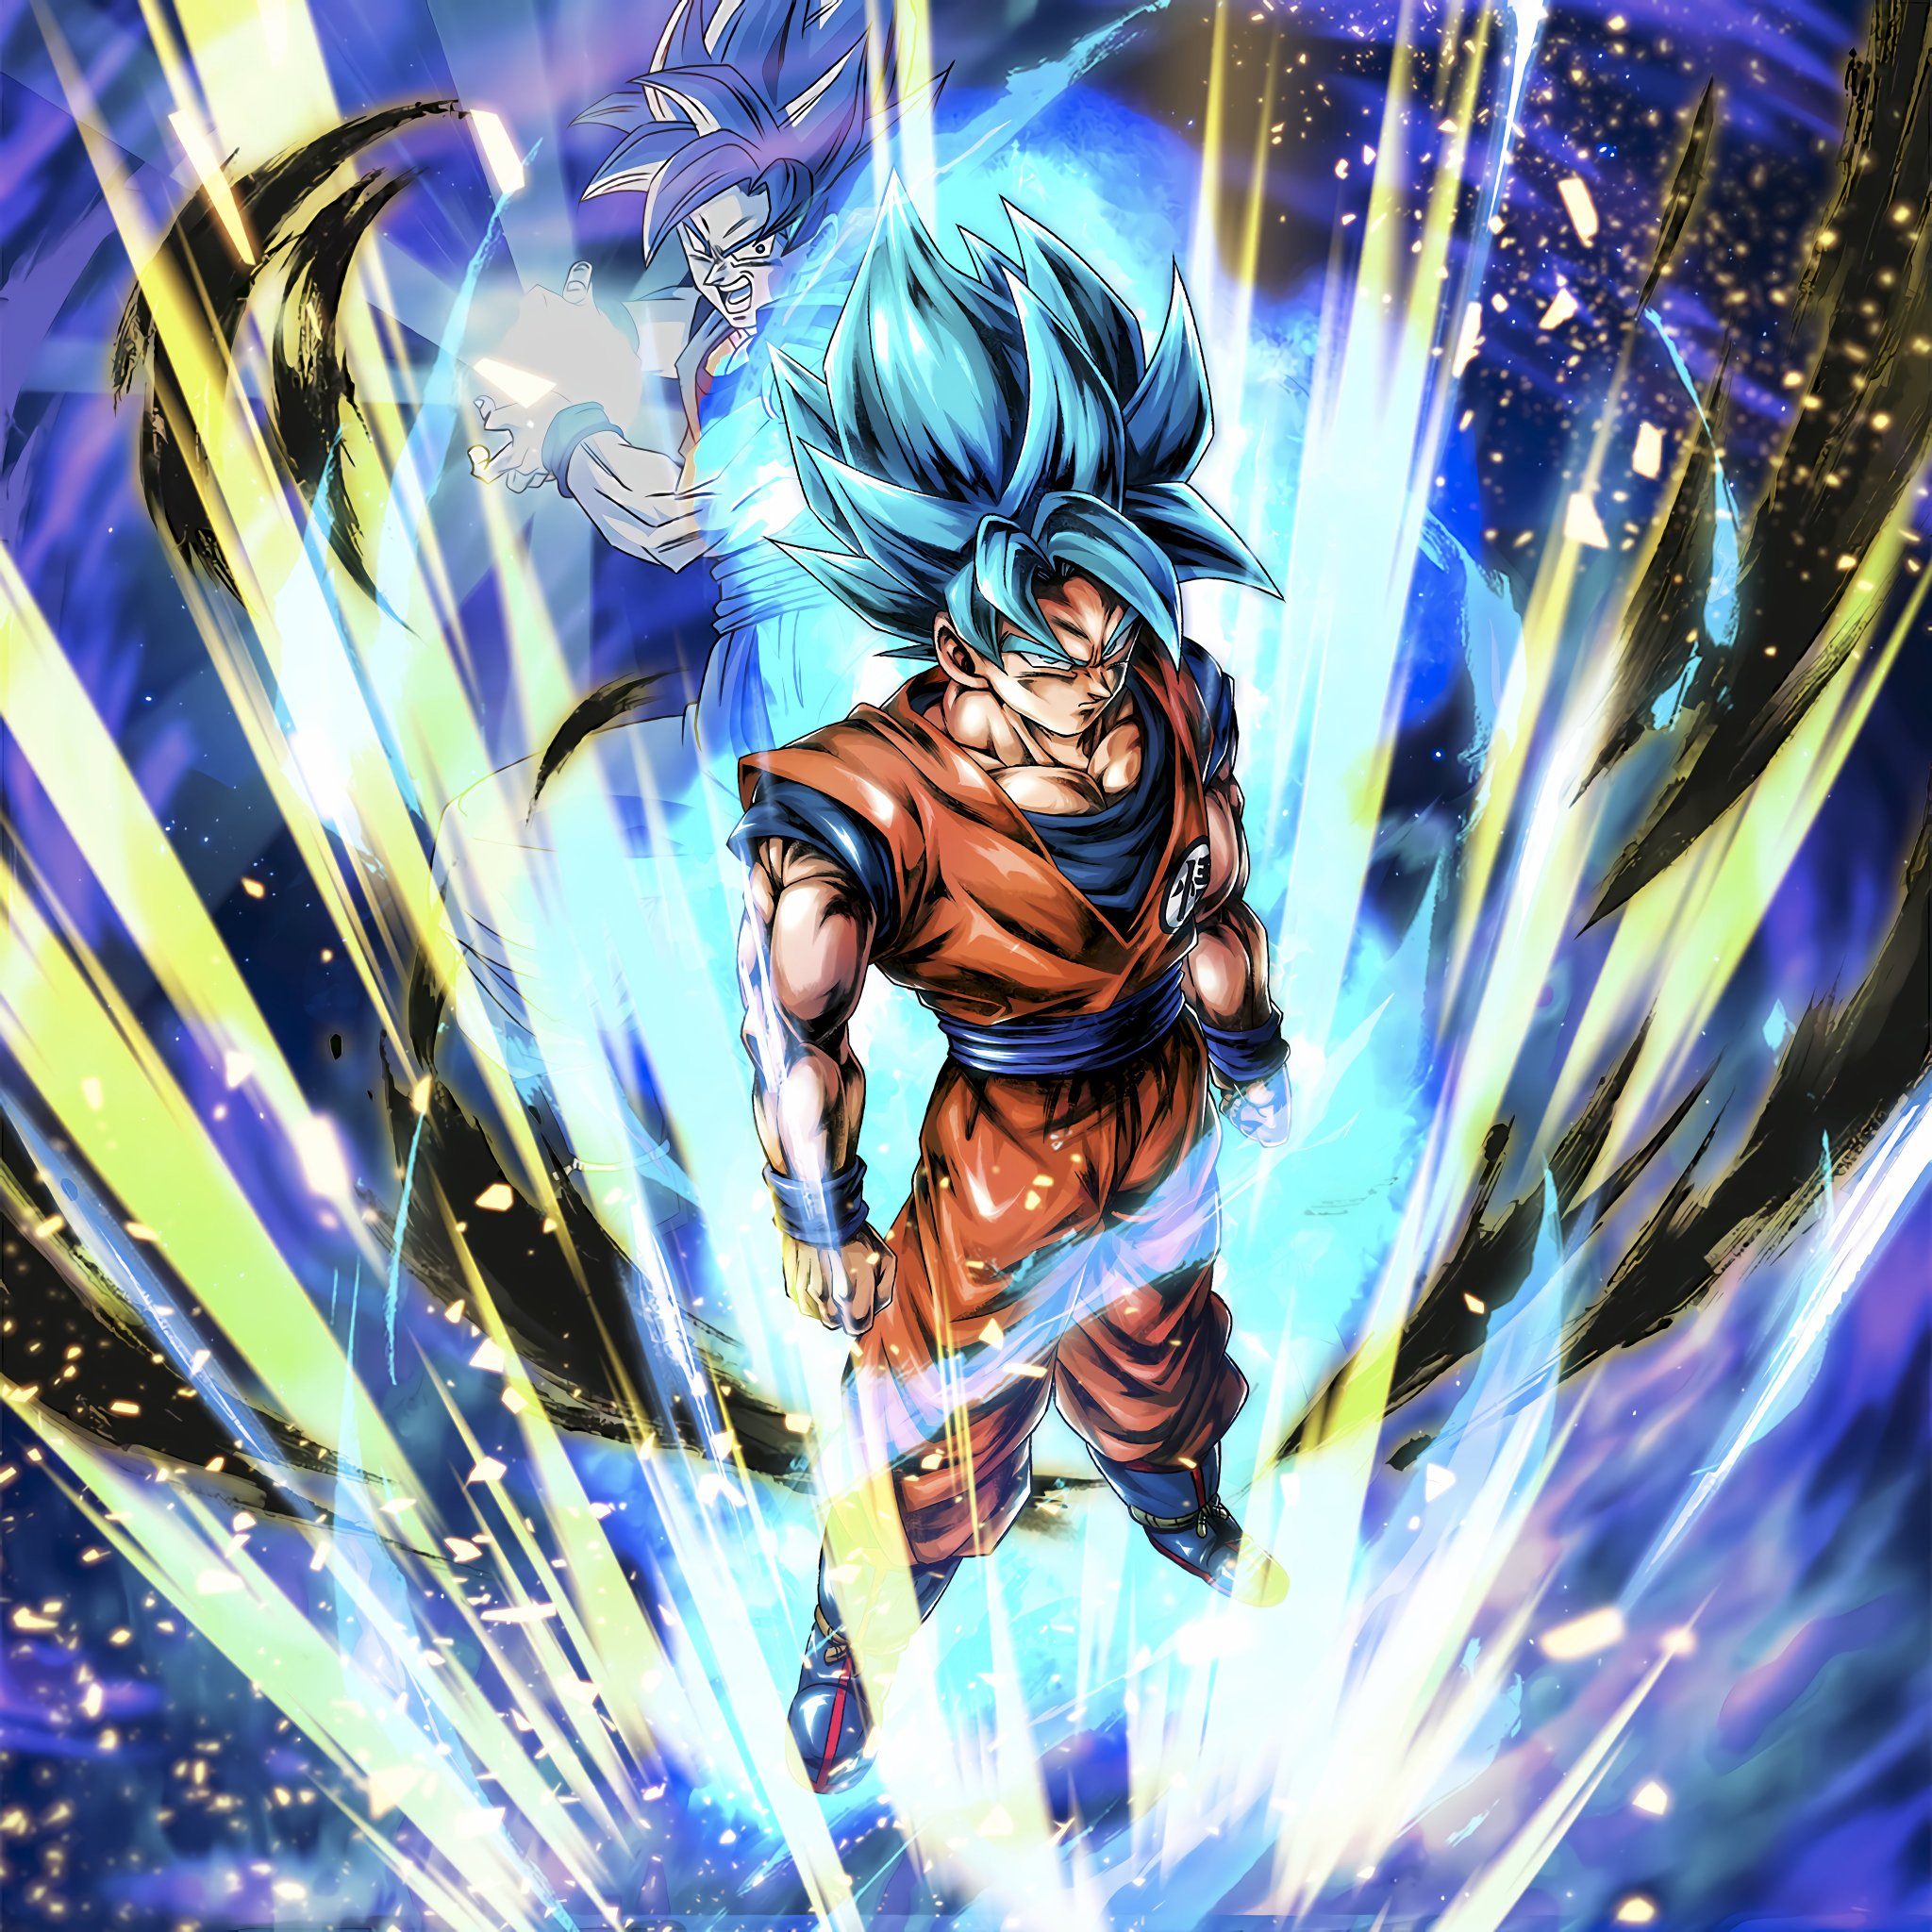 Rénaldo  on X: That new Goku Blue Artwork looks epic 🔥 https